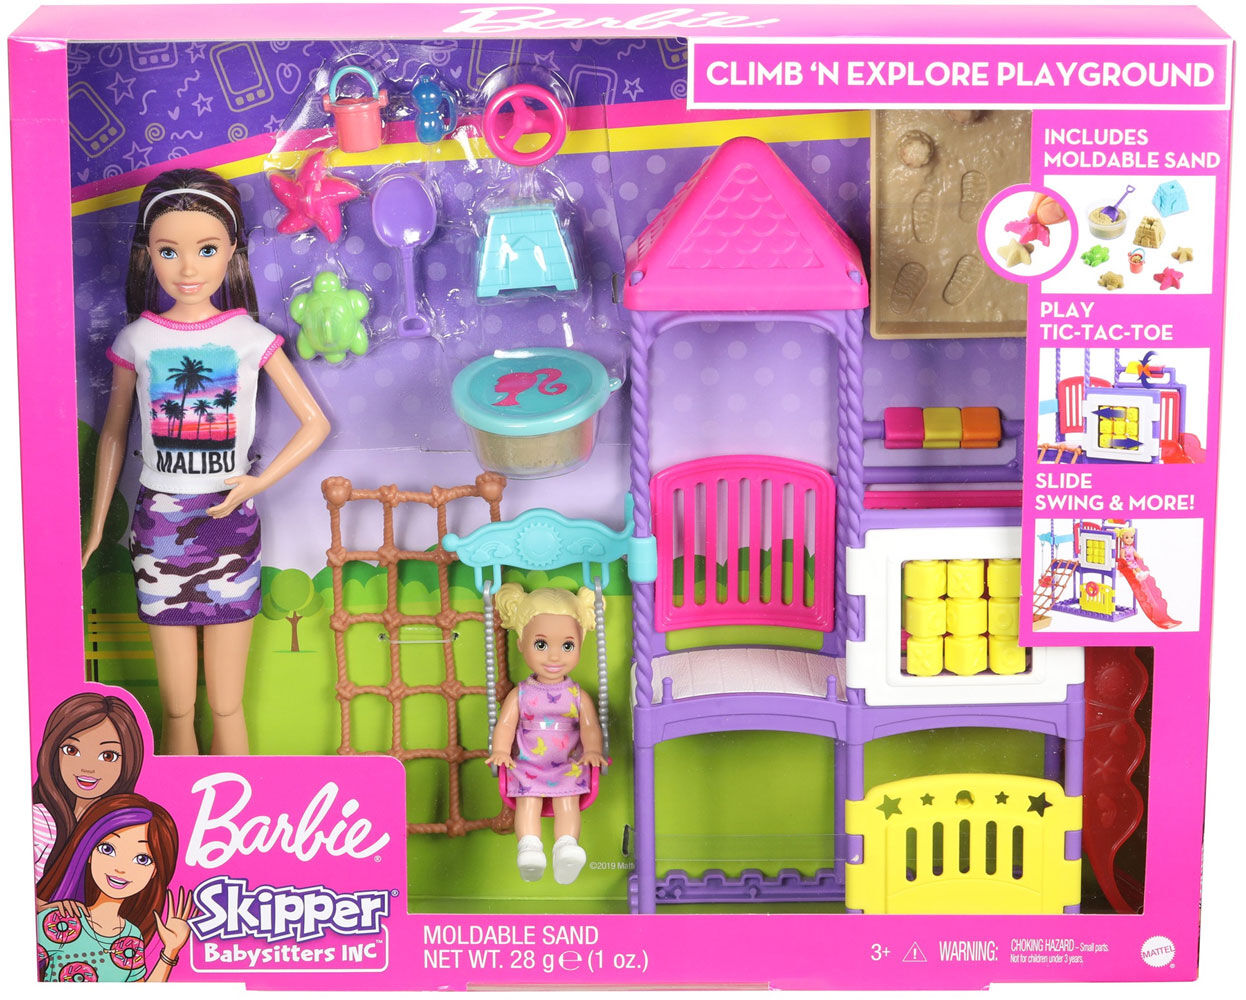 Barbie Skipper Babysitters Inc. Climb 'n Explore Playground Dolls